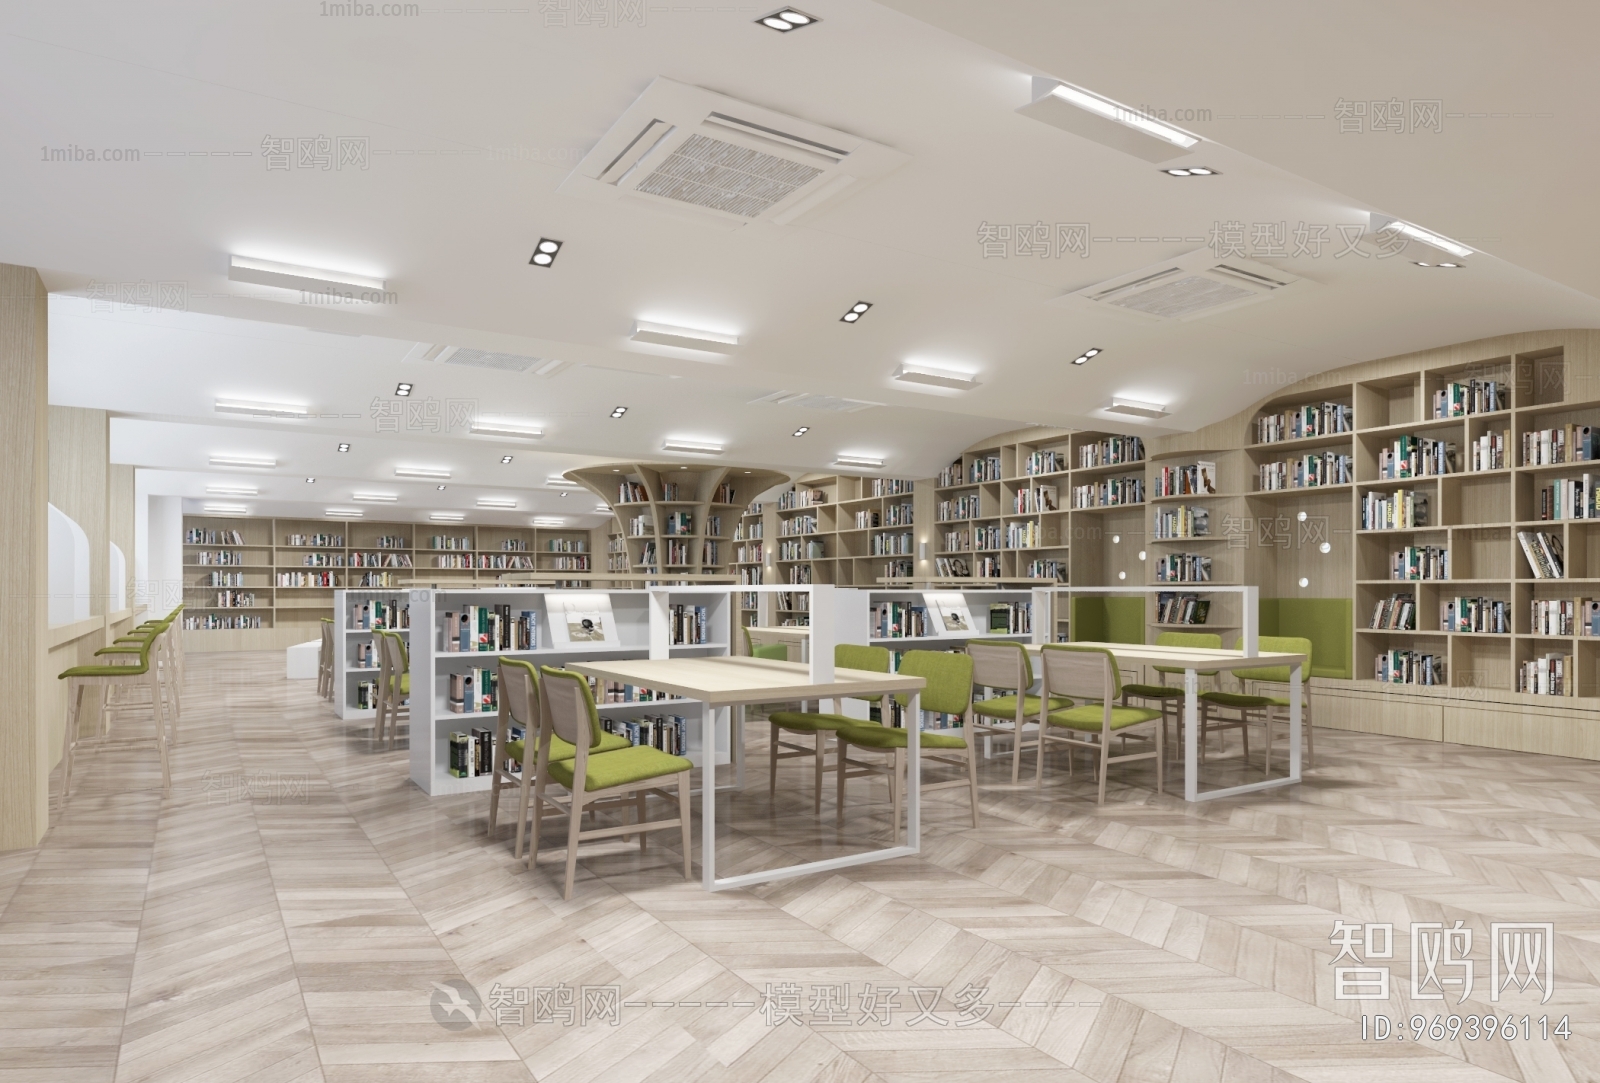 Modern Library